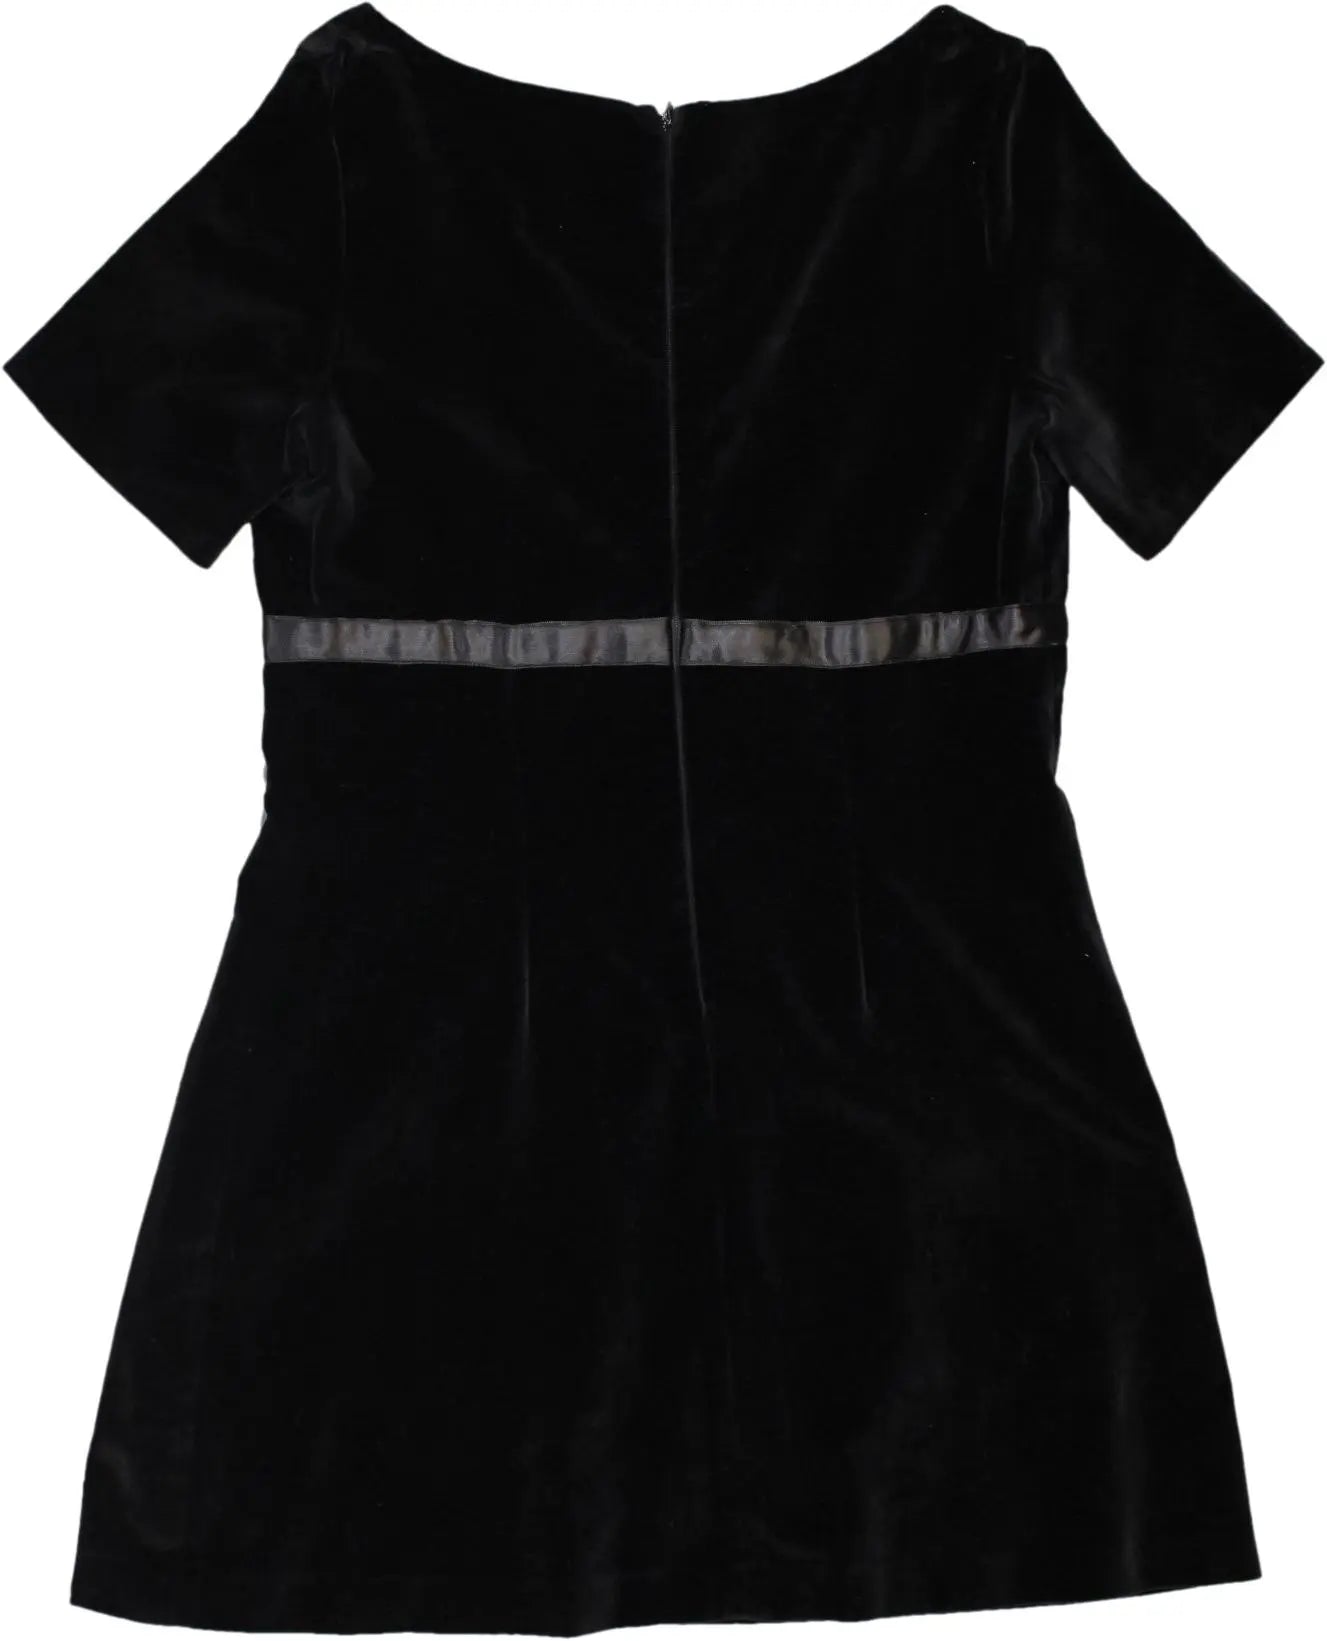 Unknown - Black Velvet Dress- ThriftTale.com - Vintage and second handclothing